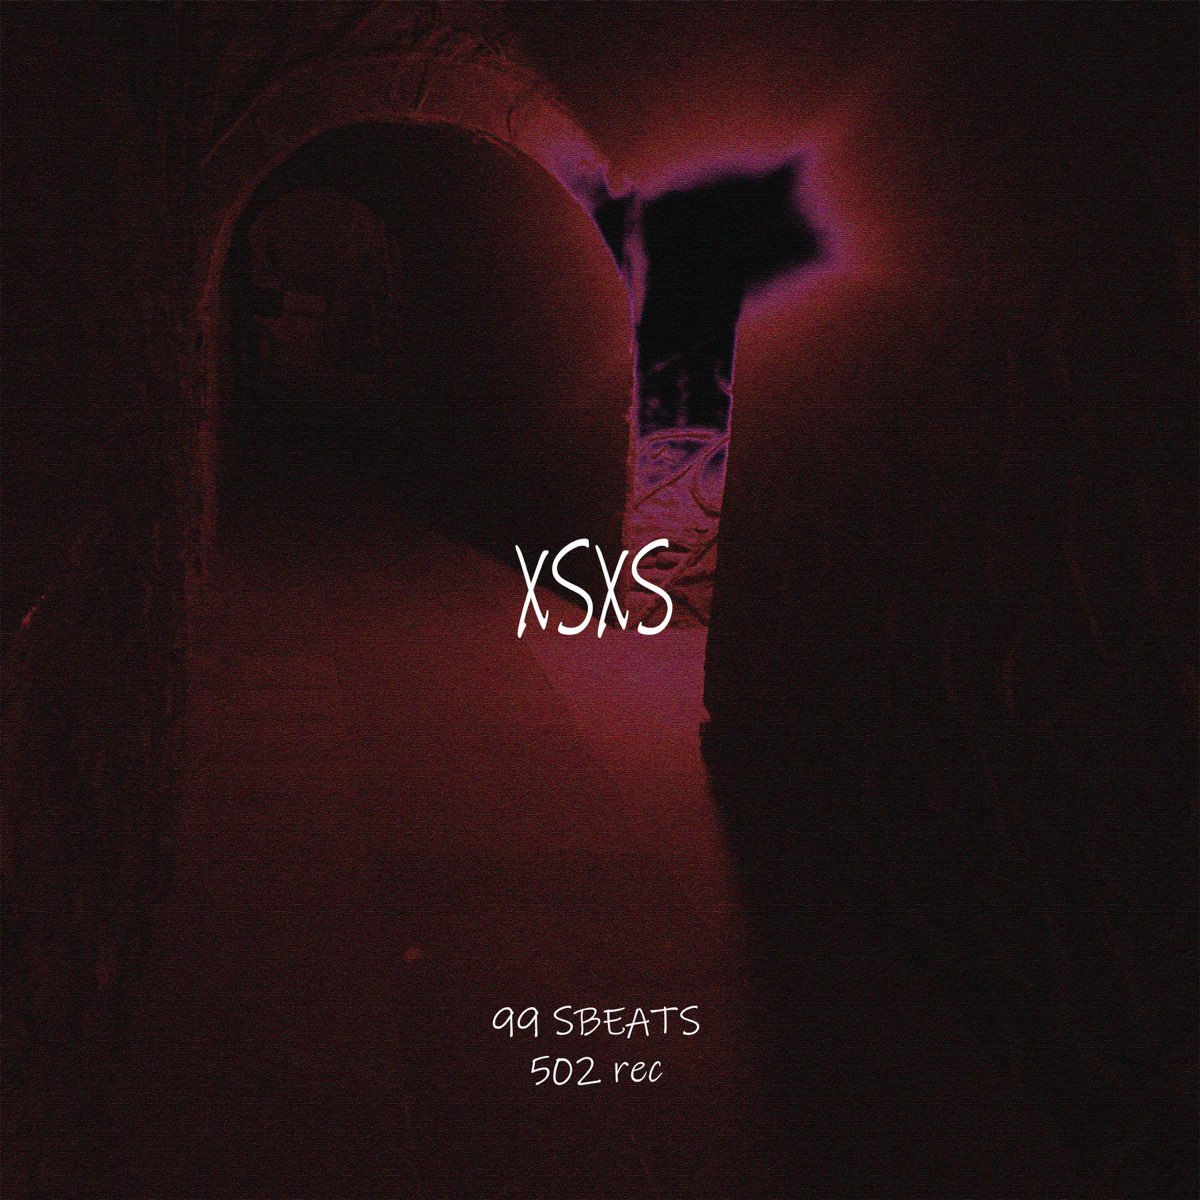 Xsxs - Single - Album by 99 SBEATS - Apple Music